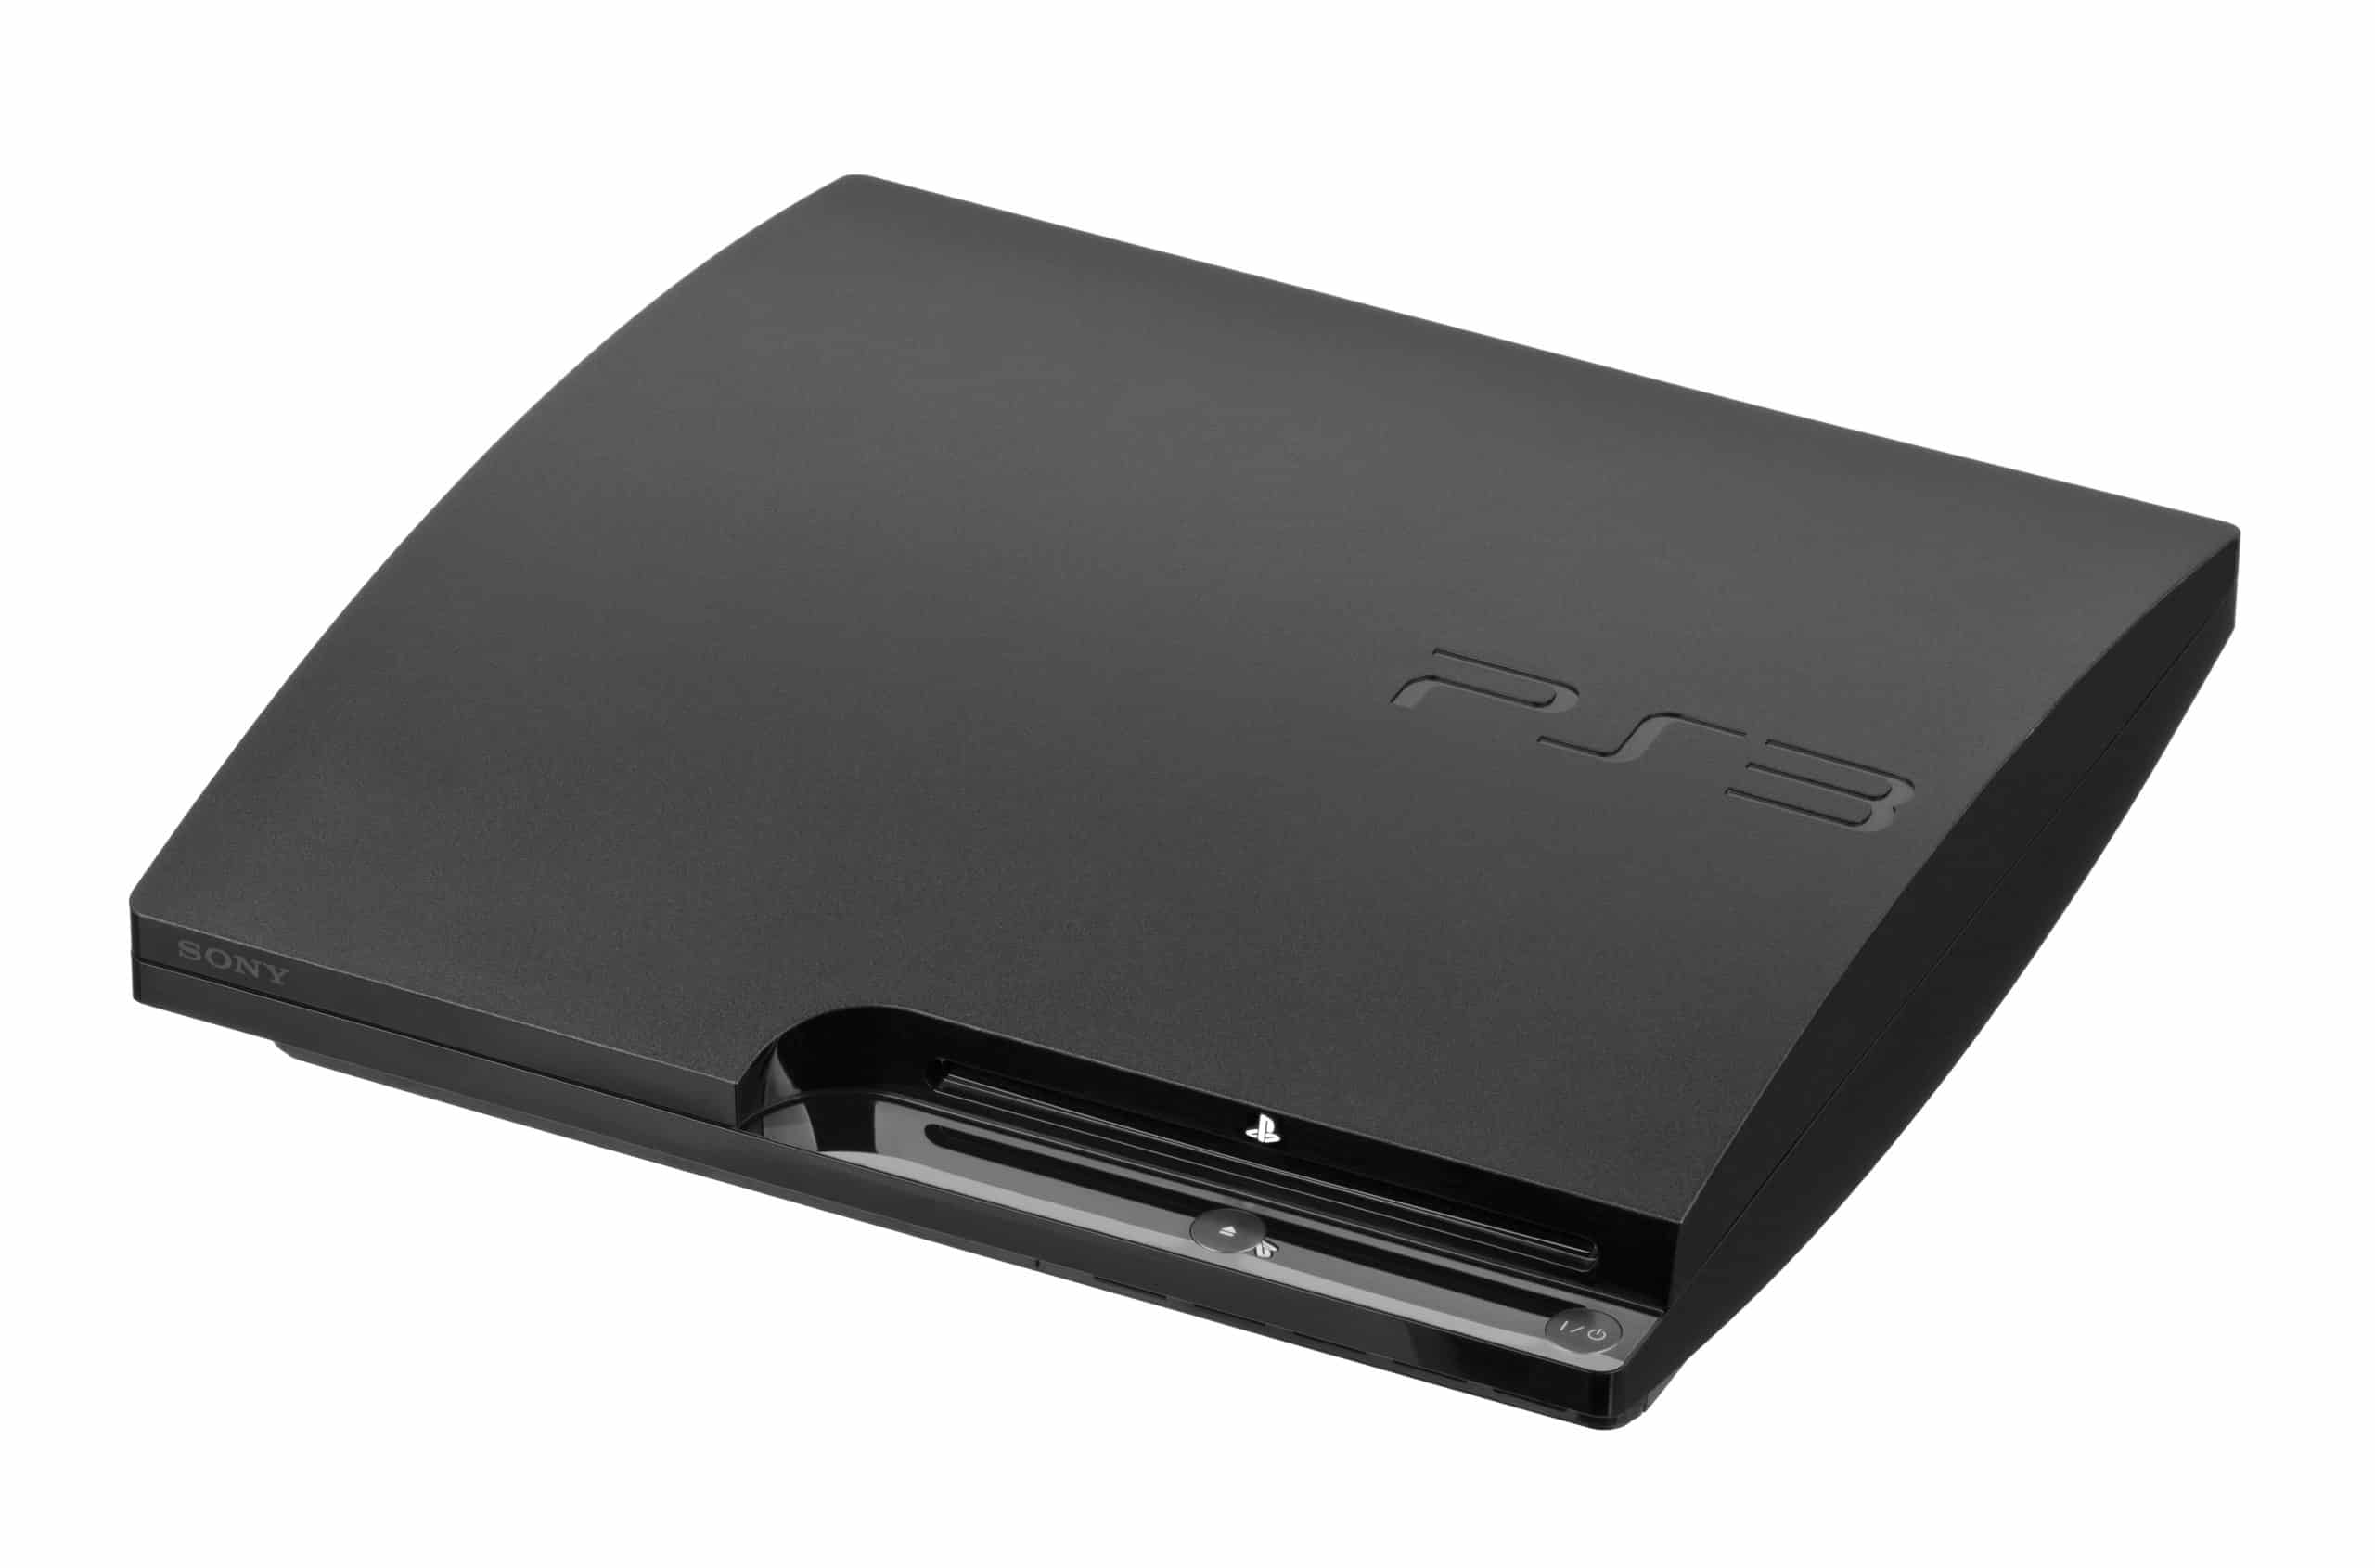 tidligere eksperimentel generøsitet Playstation 3 Slim Repair | We Fix PS3 Slim errors | Video game 911